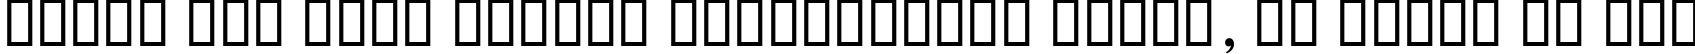 Пример написания шрифтом KacstTitle текста на русском